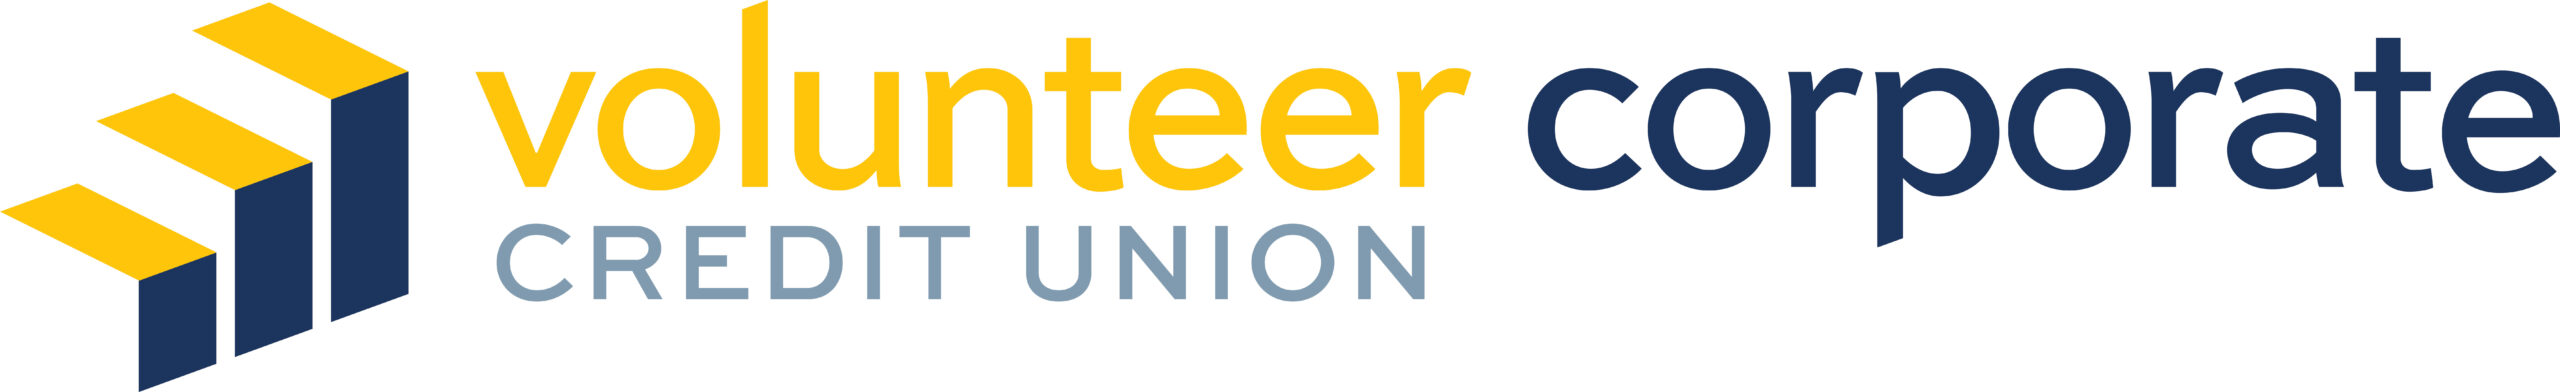 Volunteer Corporate Credit Union